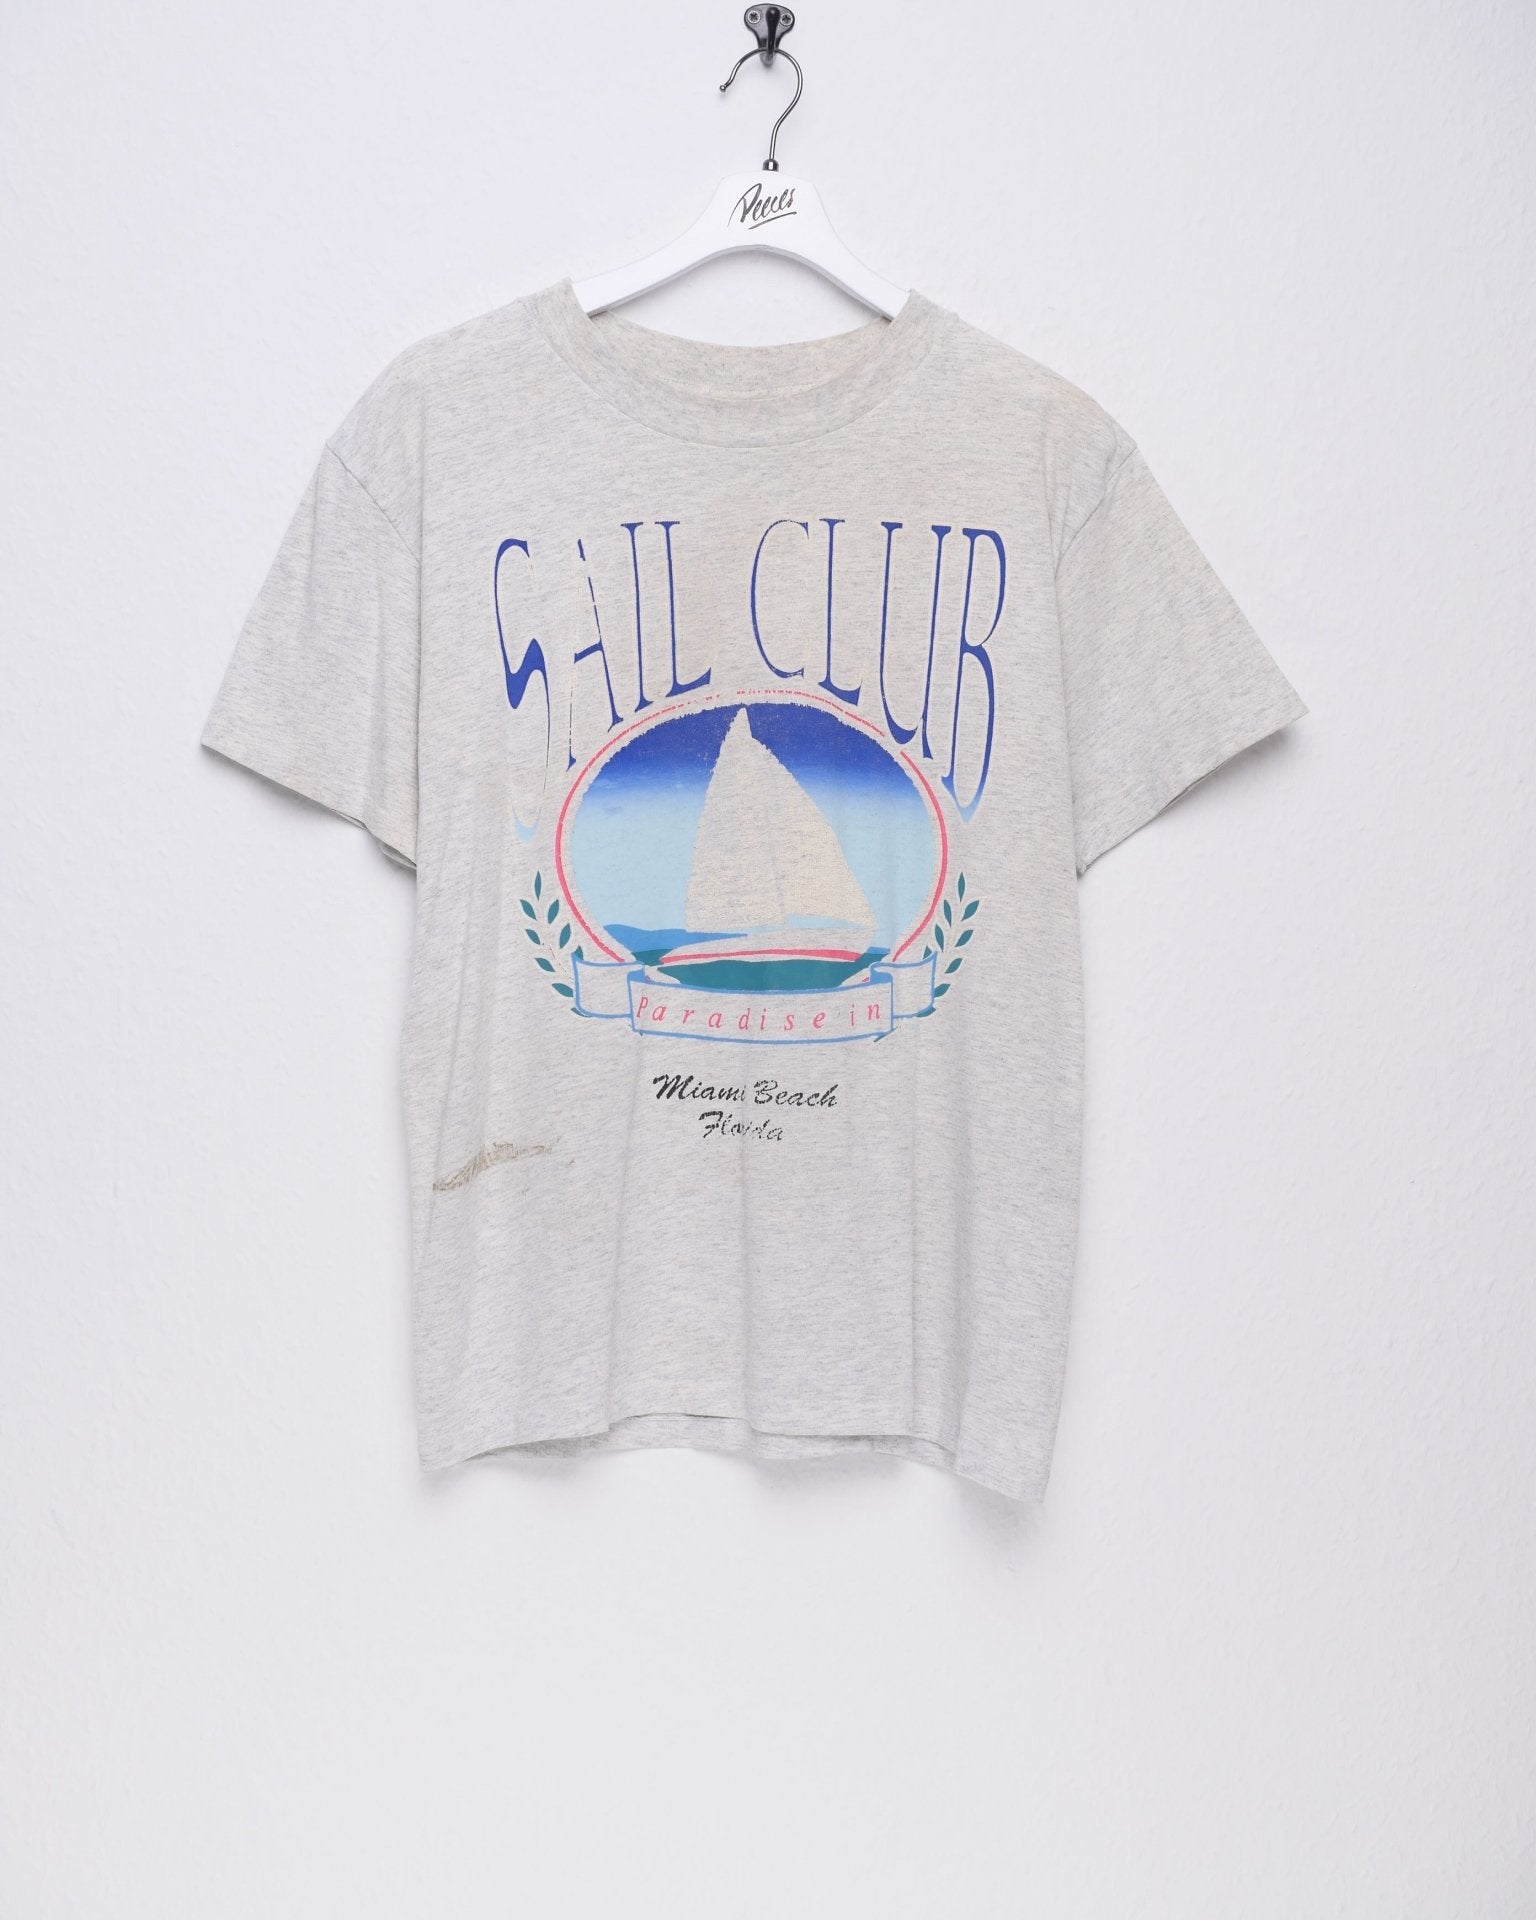 Sail Club Miami Beach Florida printed Graphic Shirt - Peeces